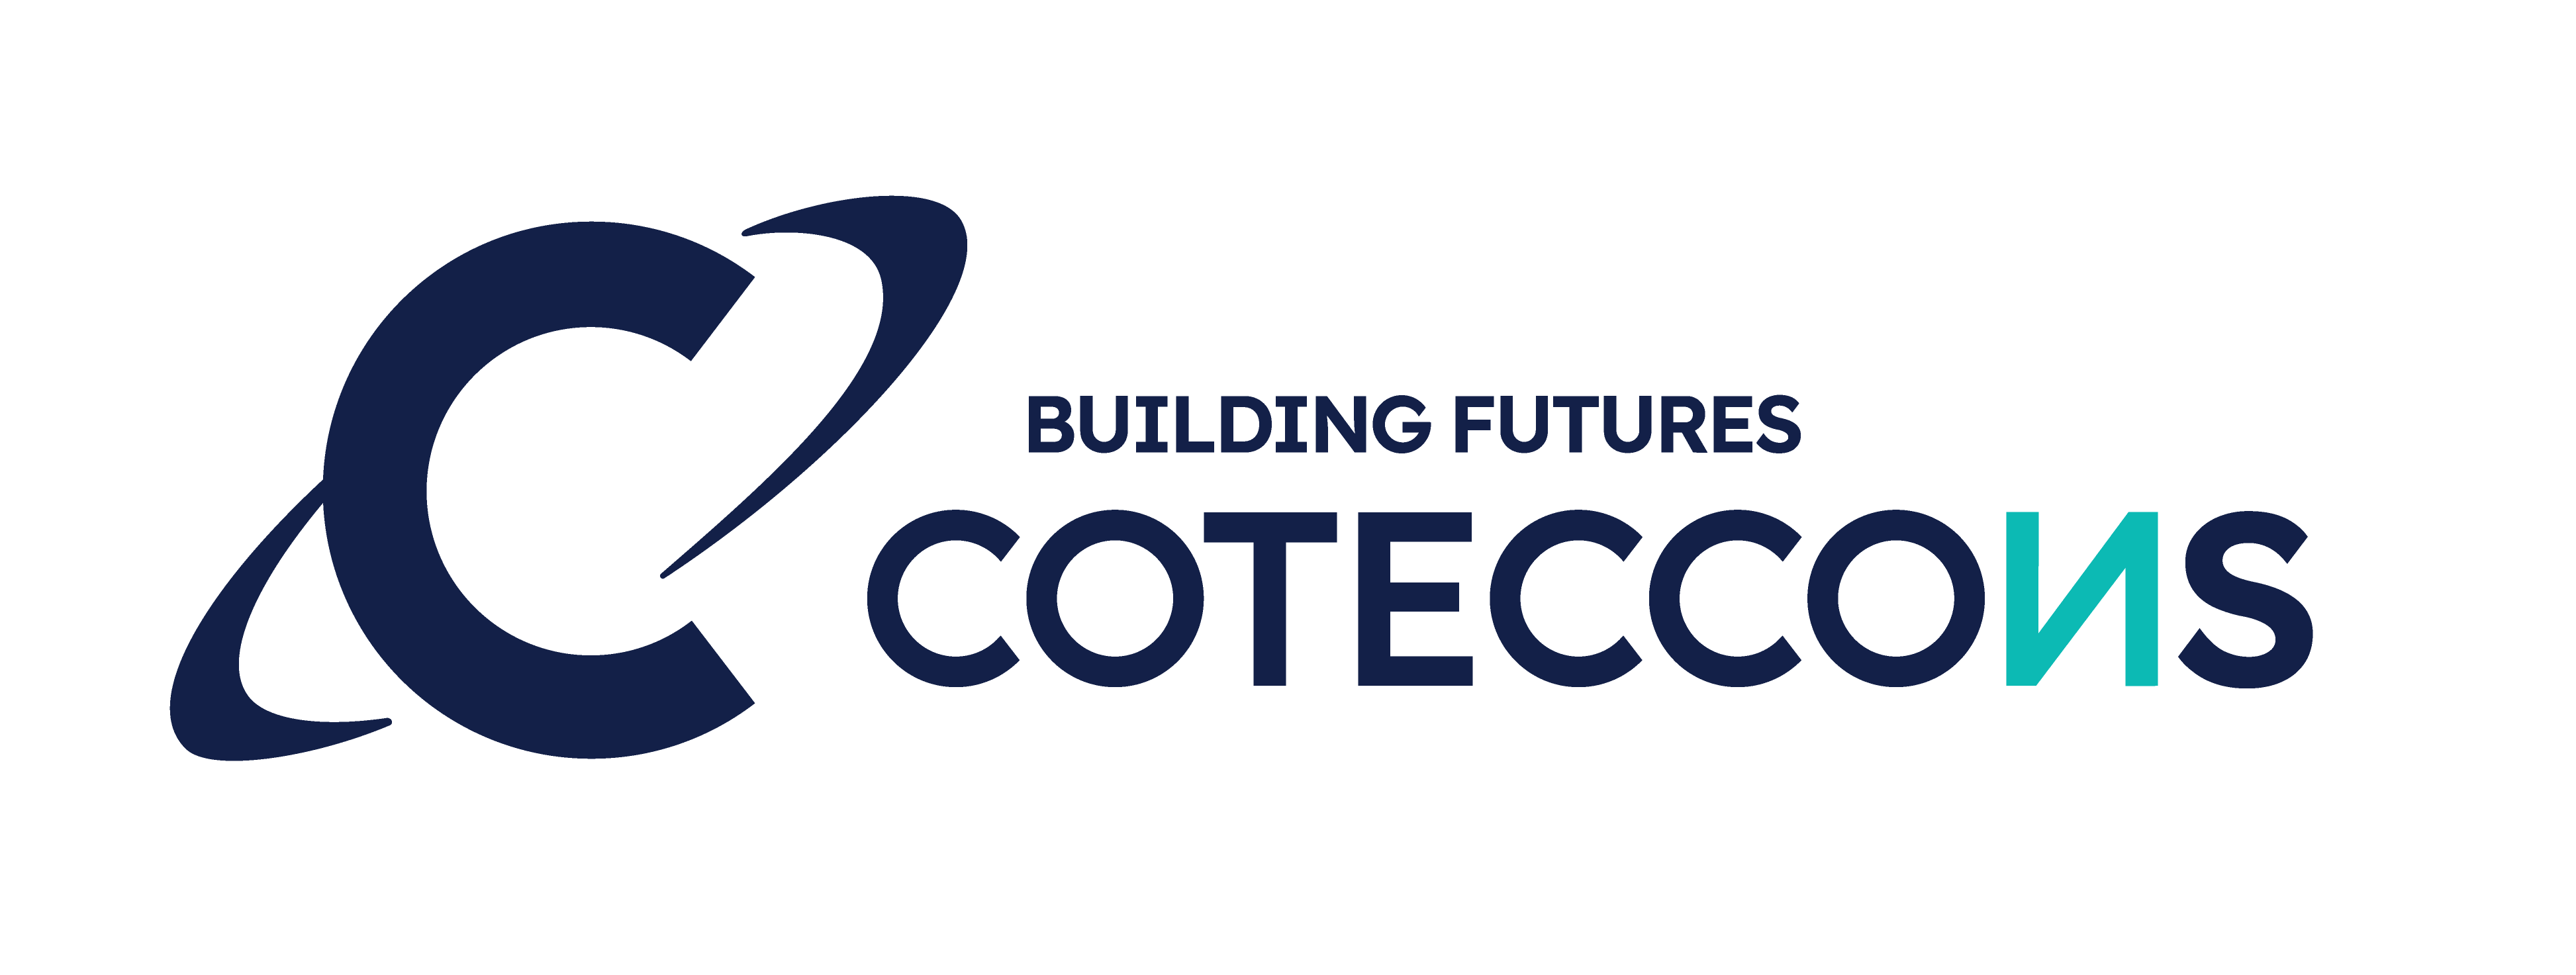 Coteccons Logo